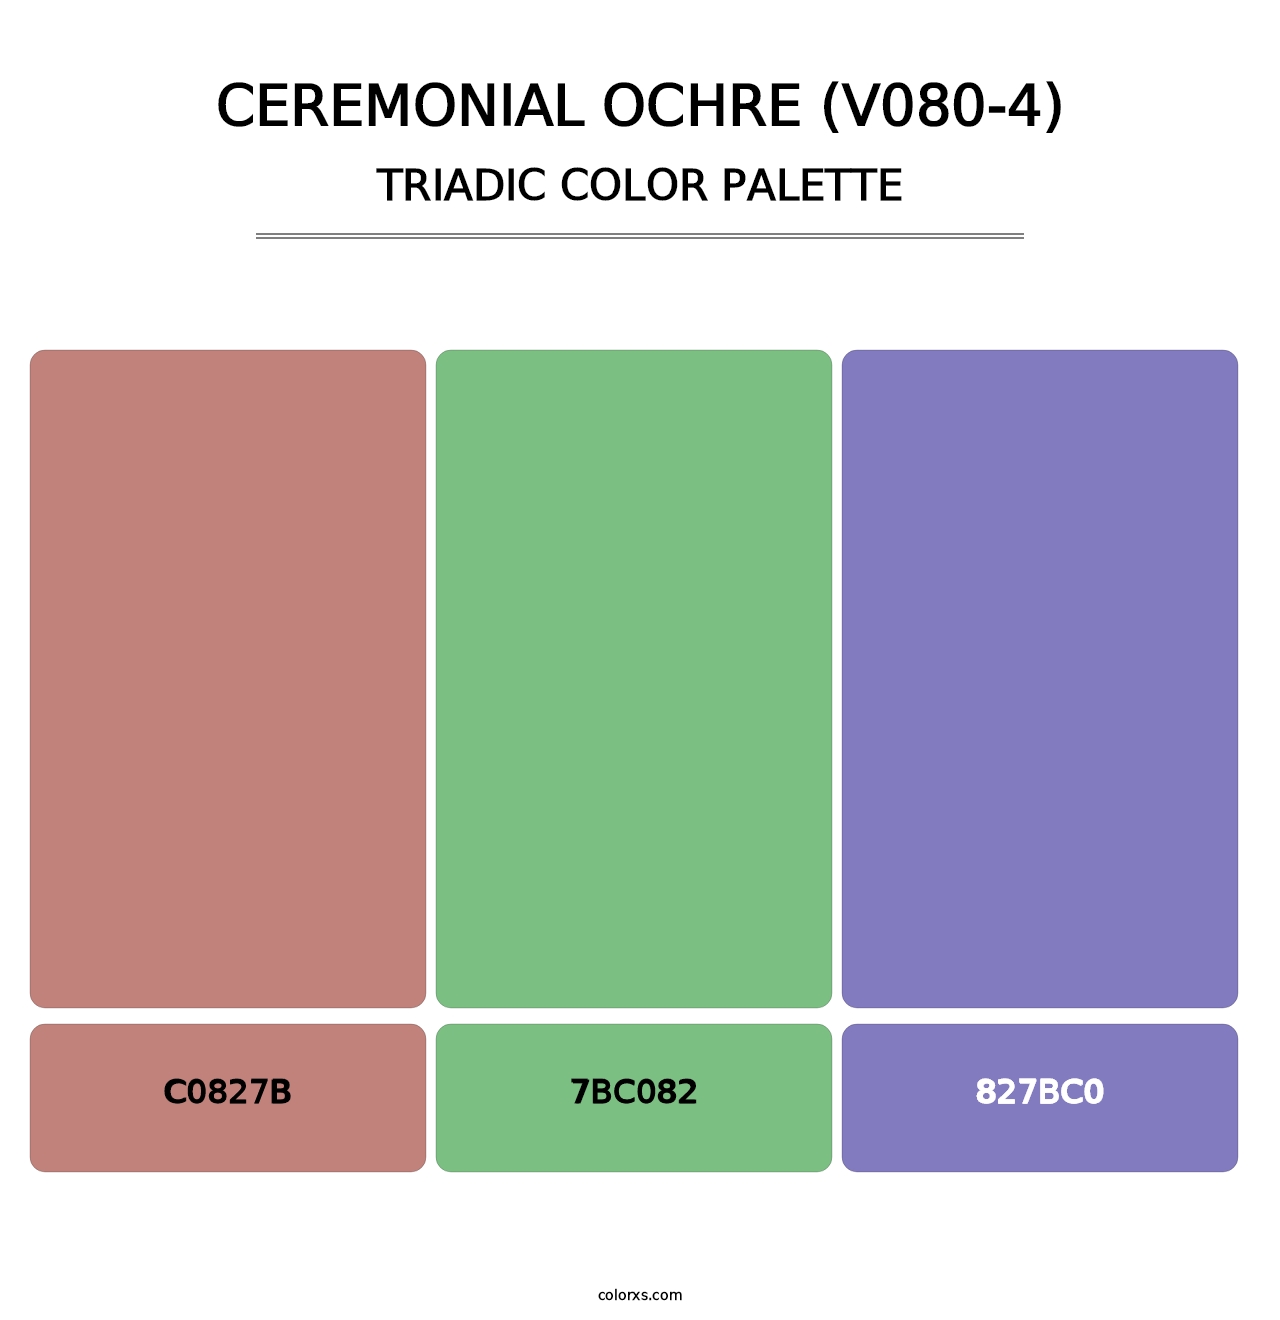 Ceremonial Ochre (V080-4) - Triadic Color Palette